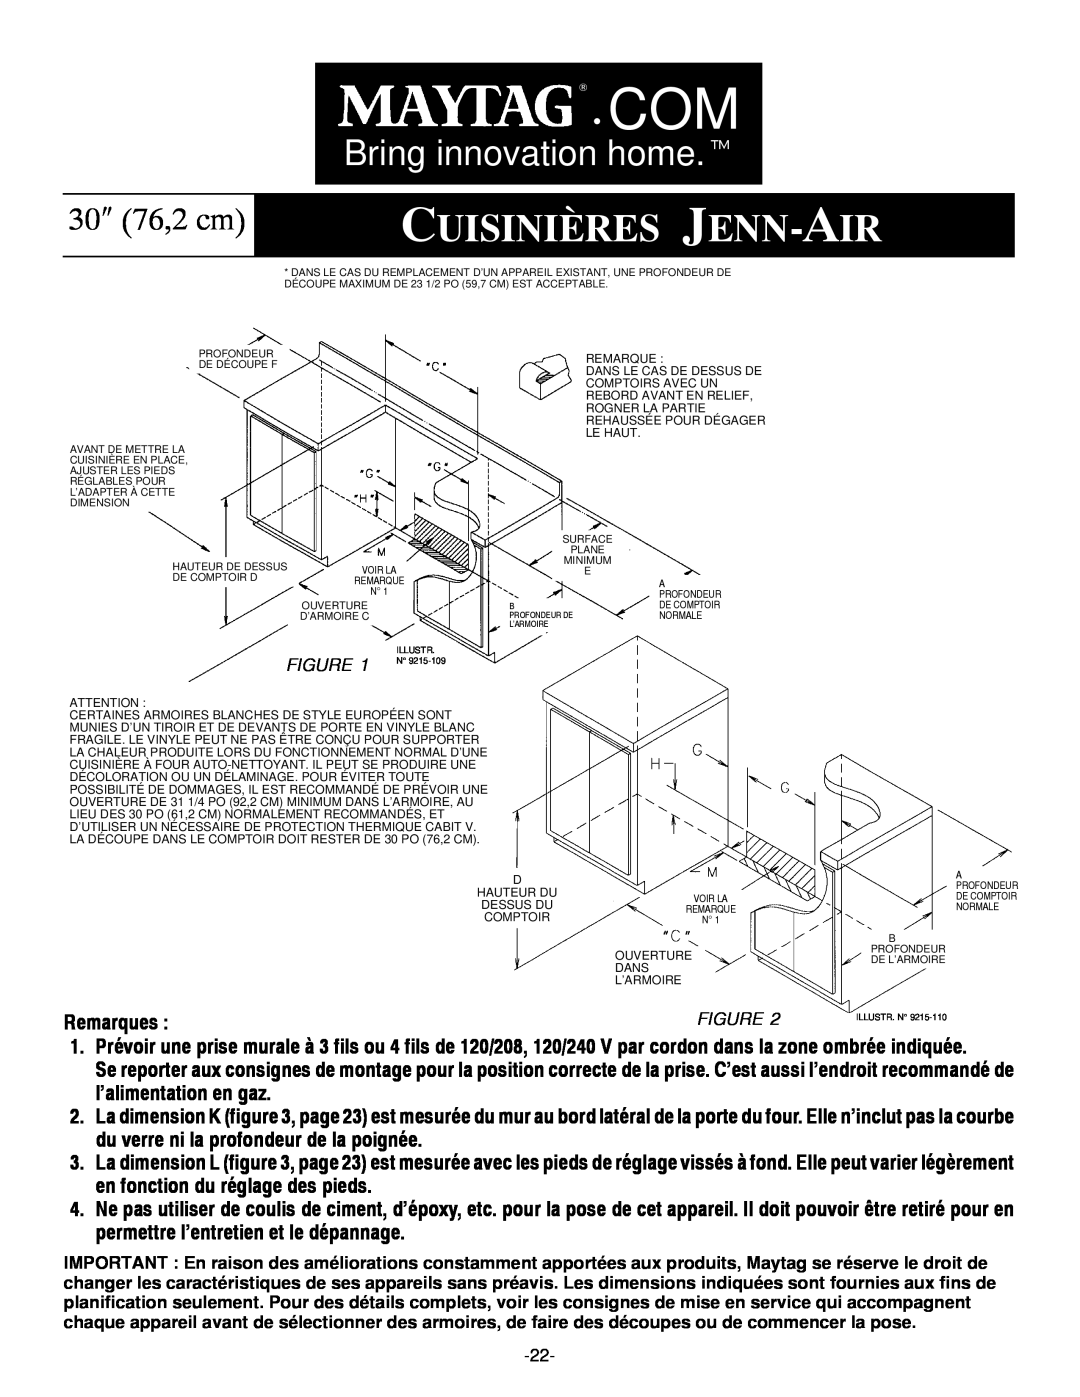 Jenn-Air Range installation manual Cuisinières Jenn-Air, Bring innovation home.t, 30 76,2 cm 